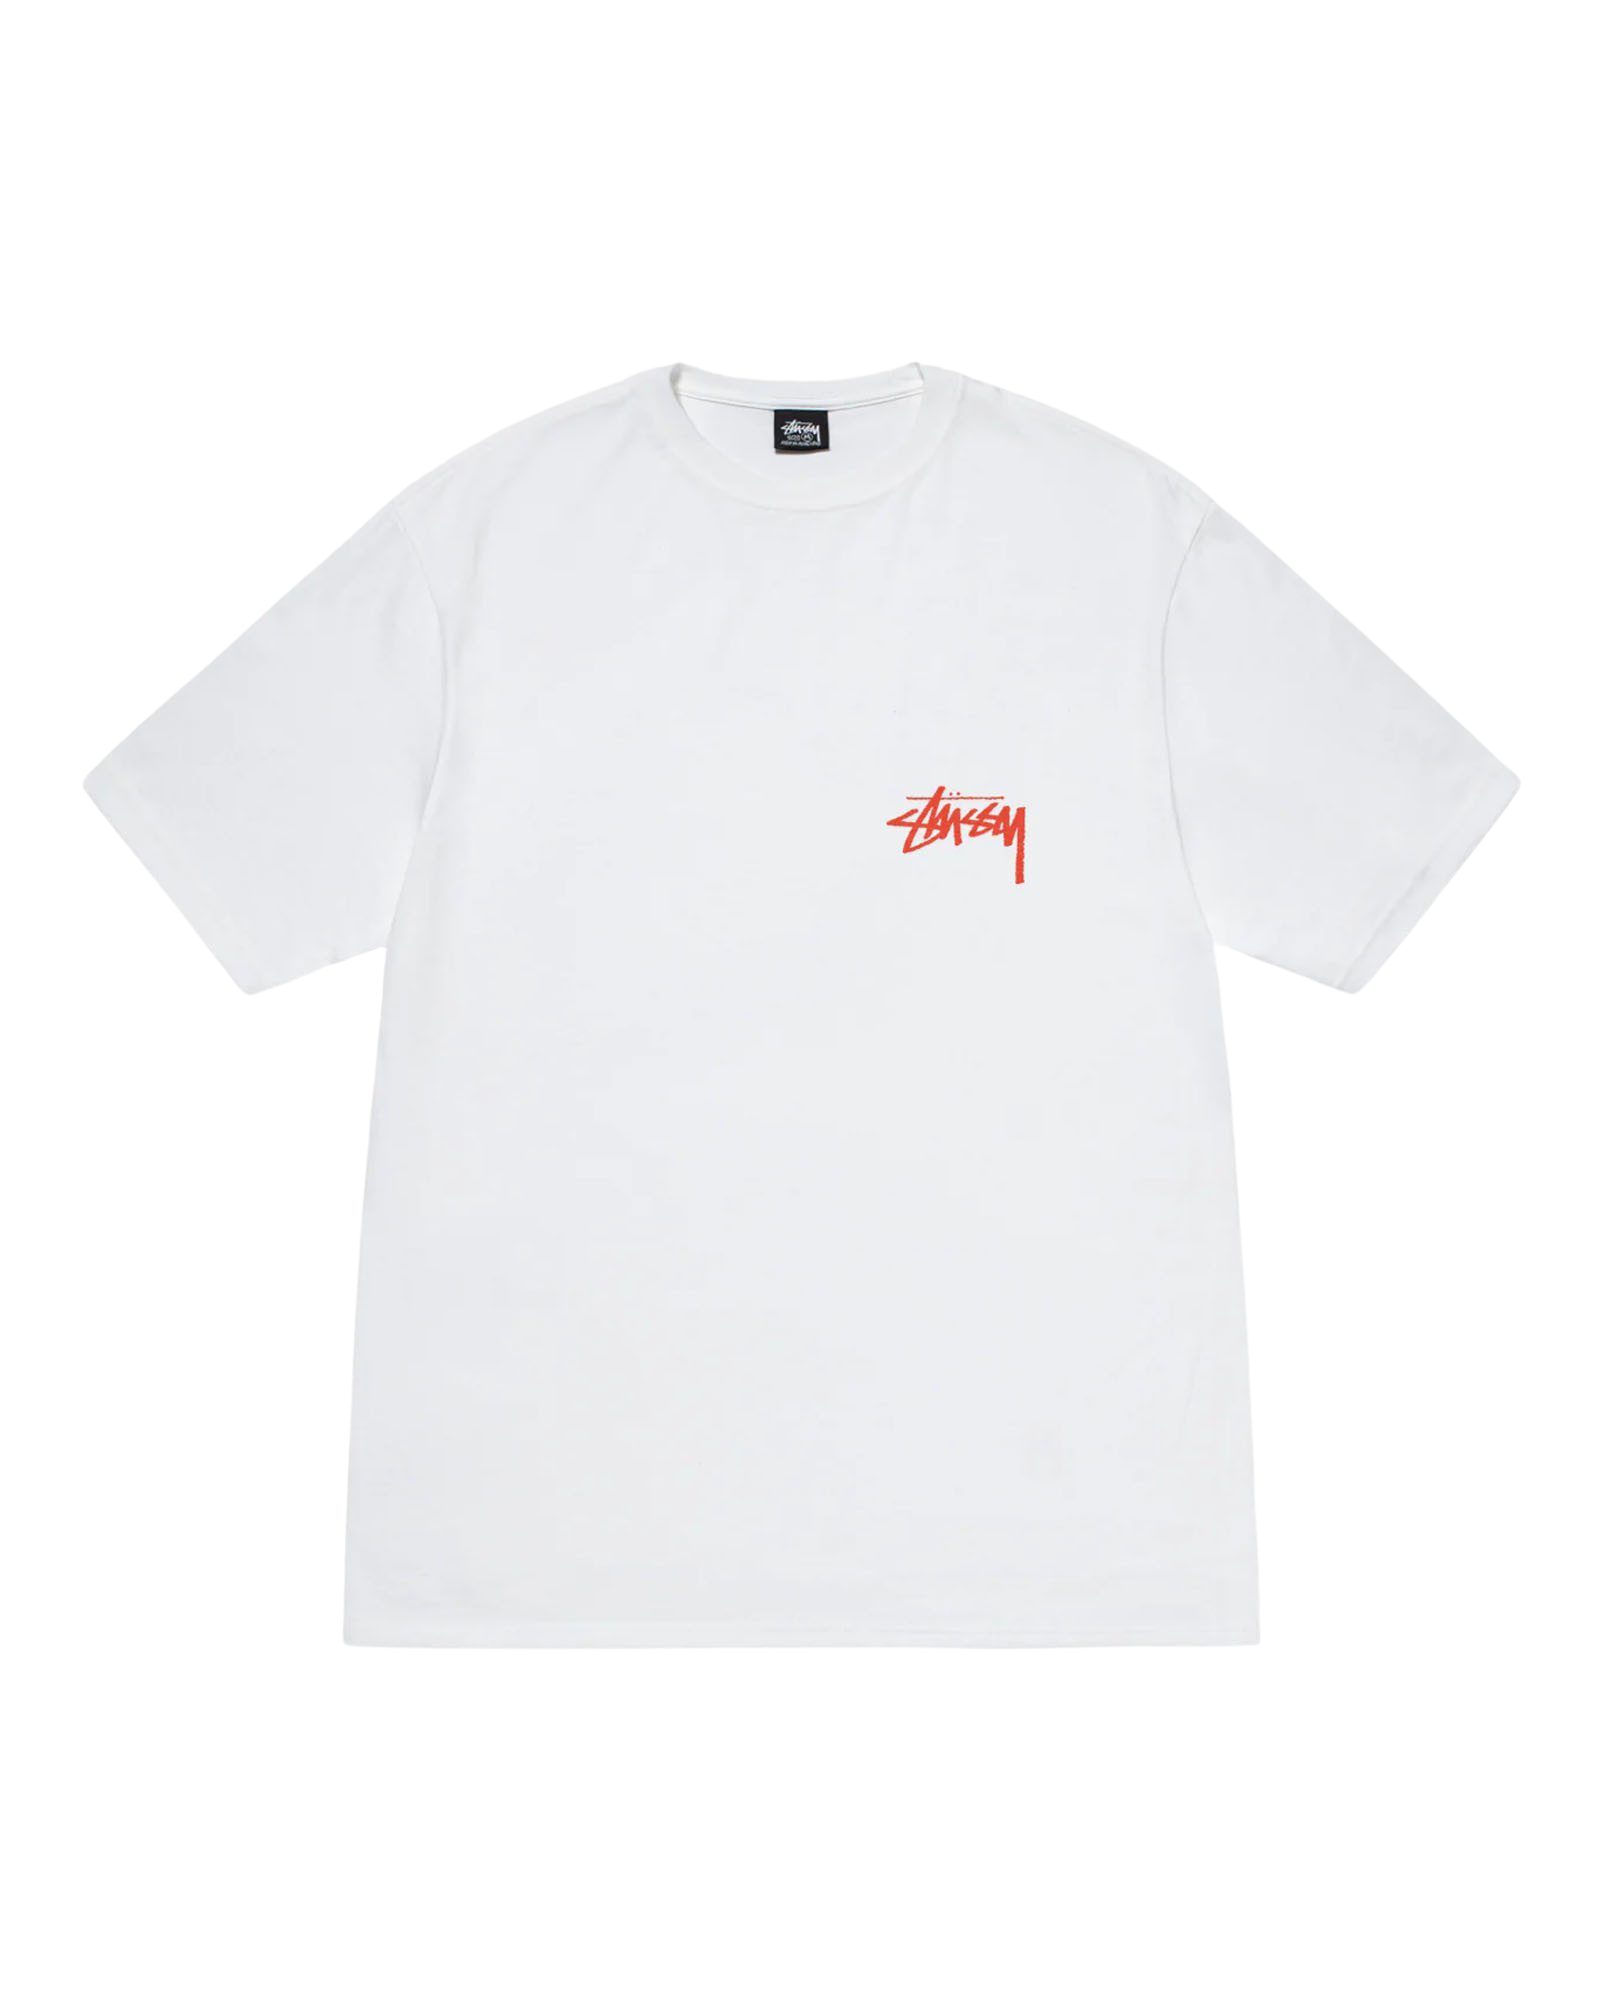 Classroom Tee $59 Stussy Tops T-Shirts White